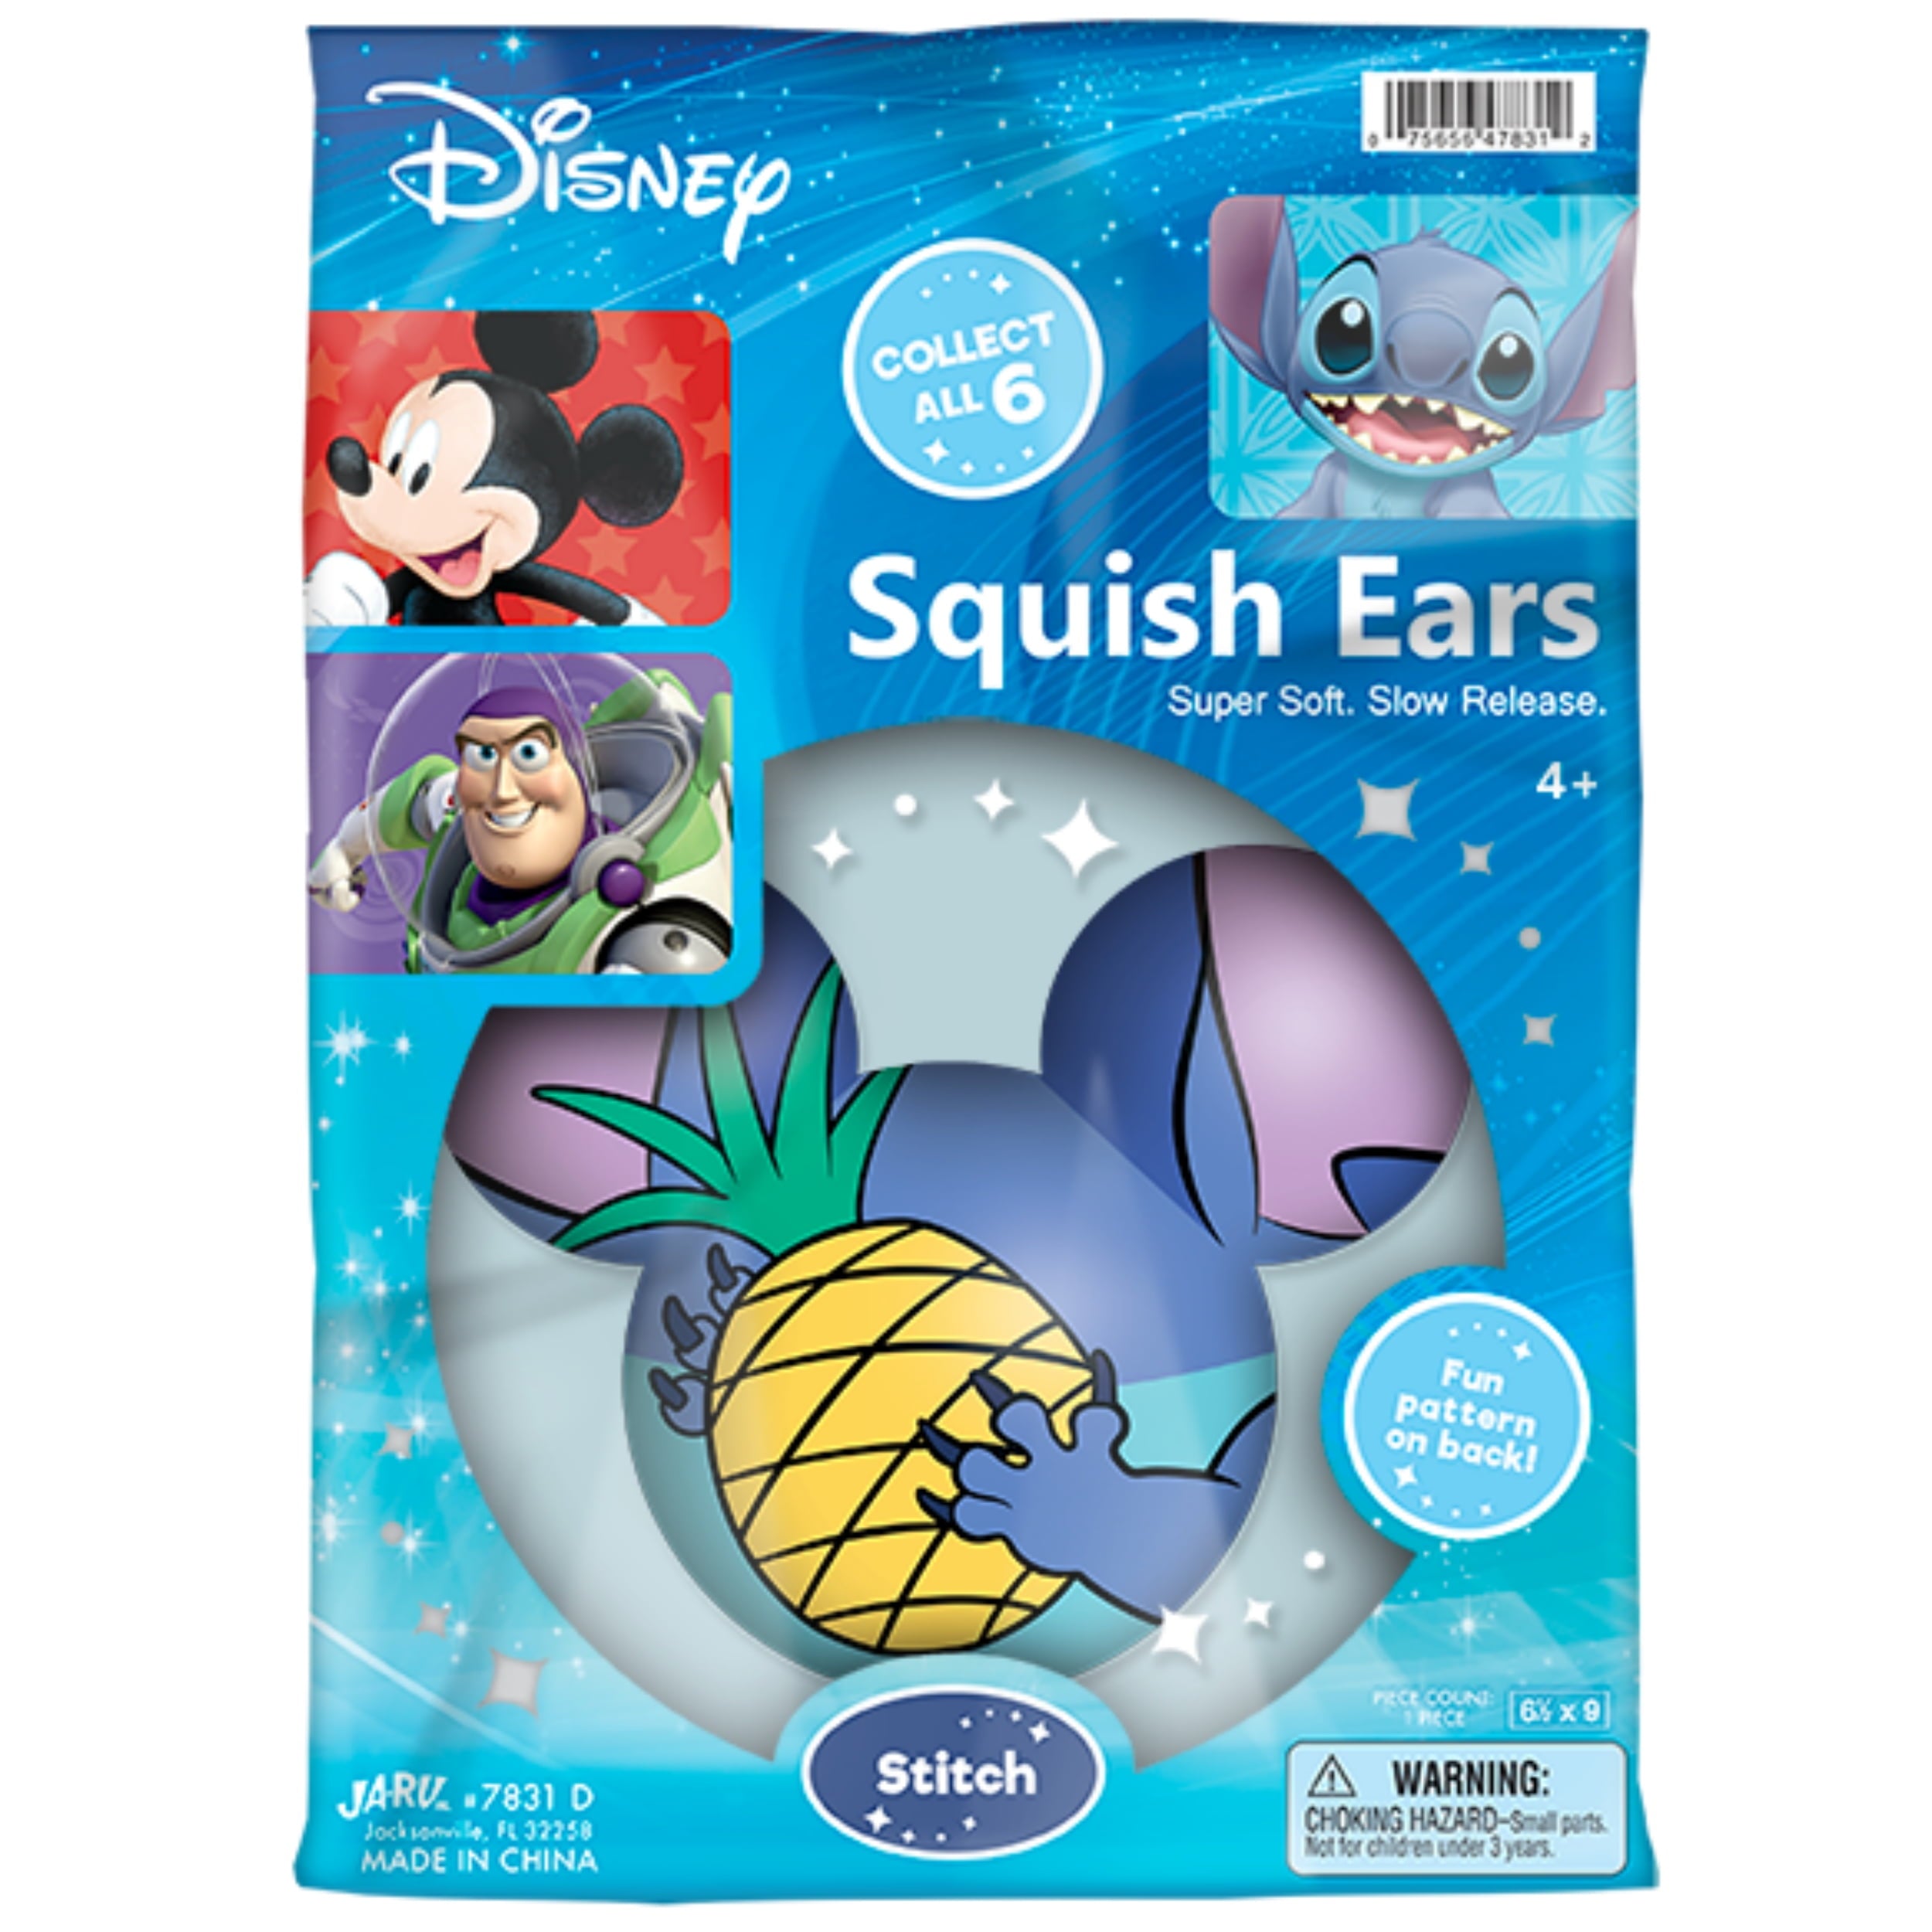 Disney Squish Ears, Slow Rise Foam, 2 Sides, 1 Piece, Novelty Toy